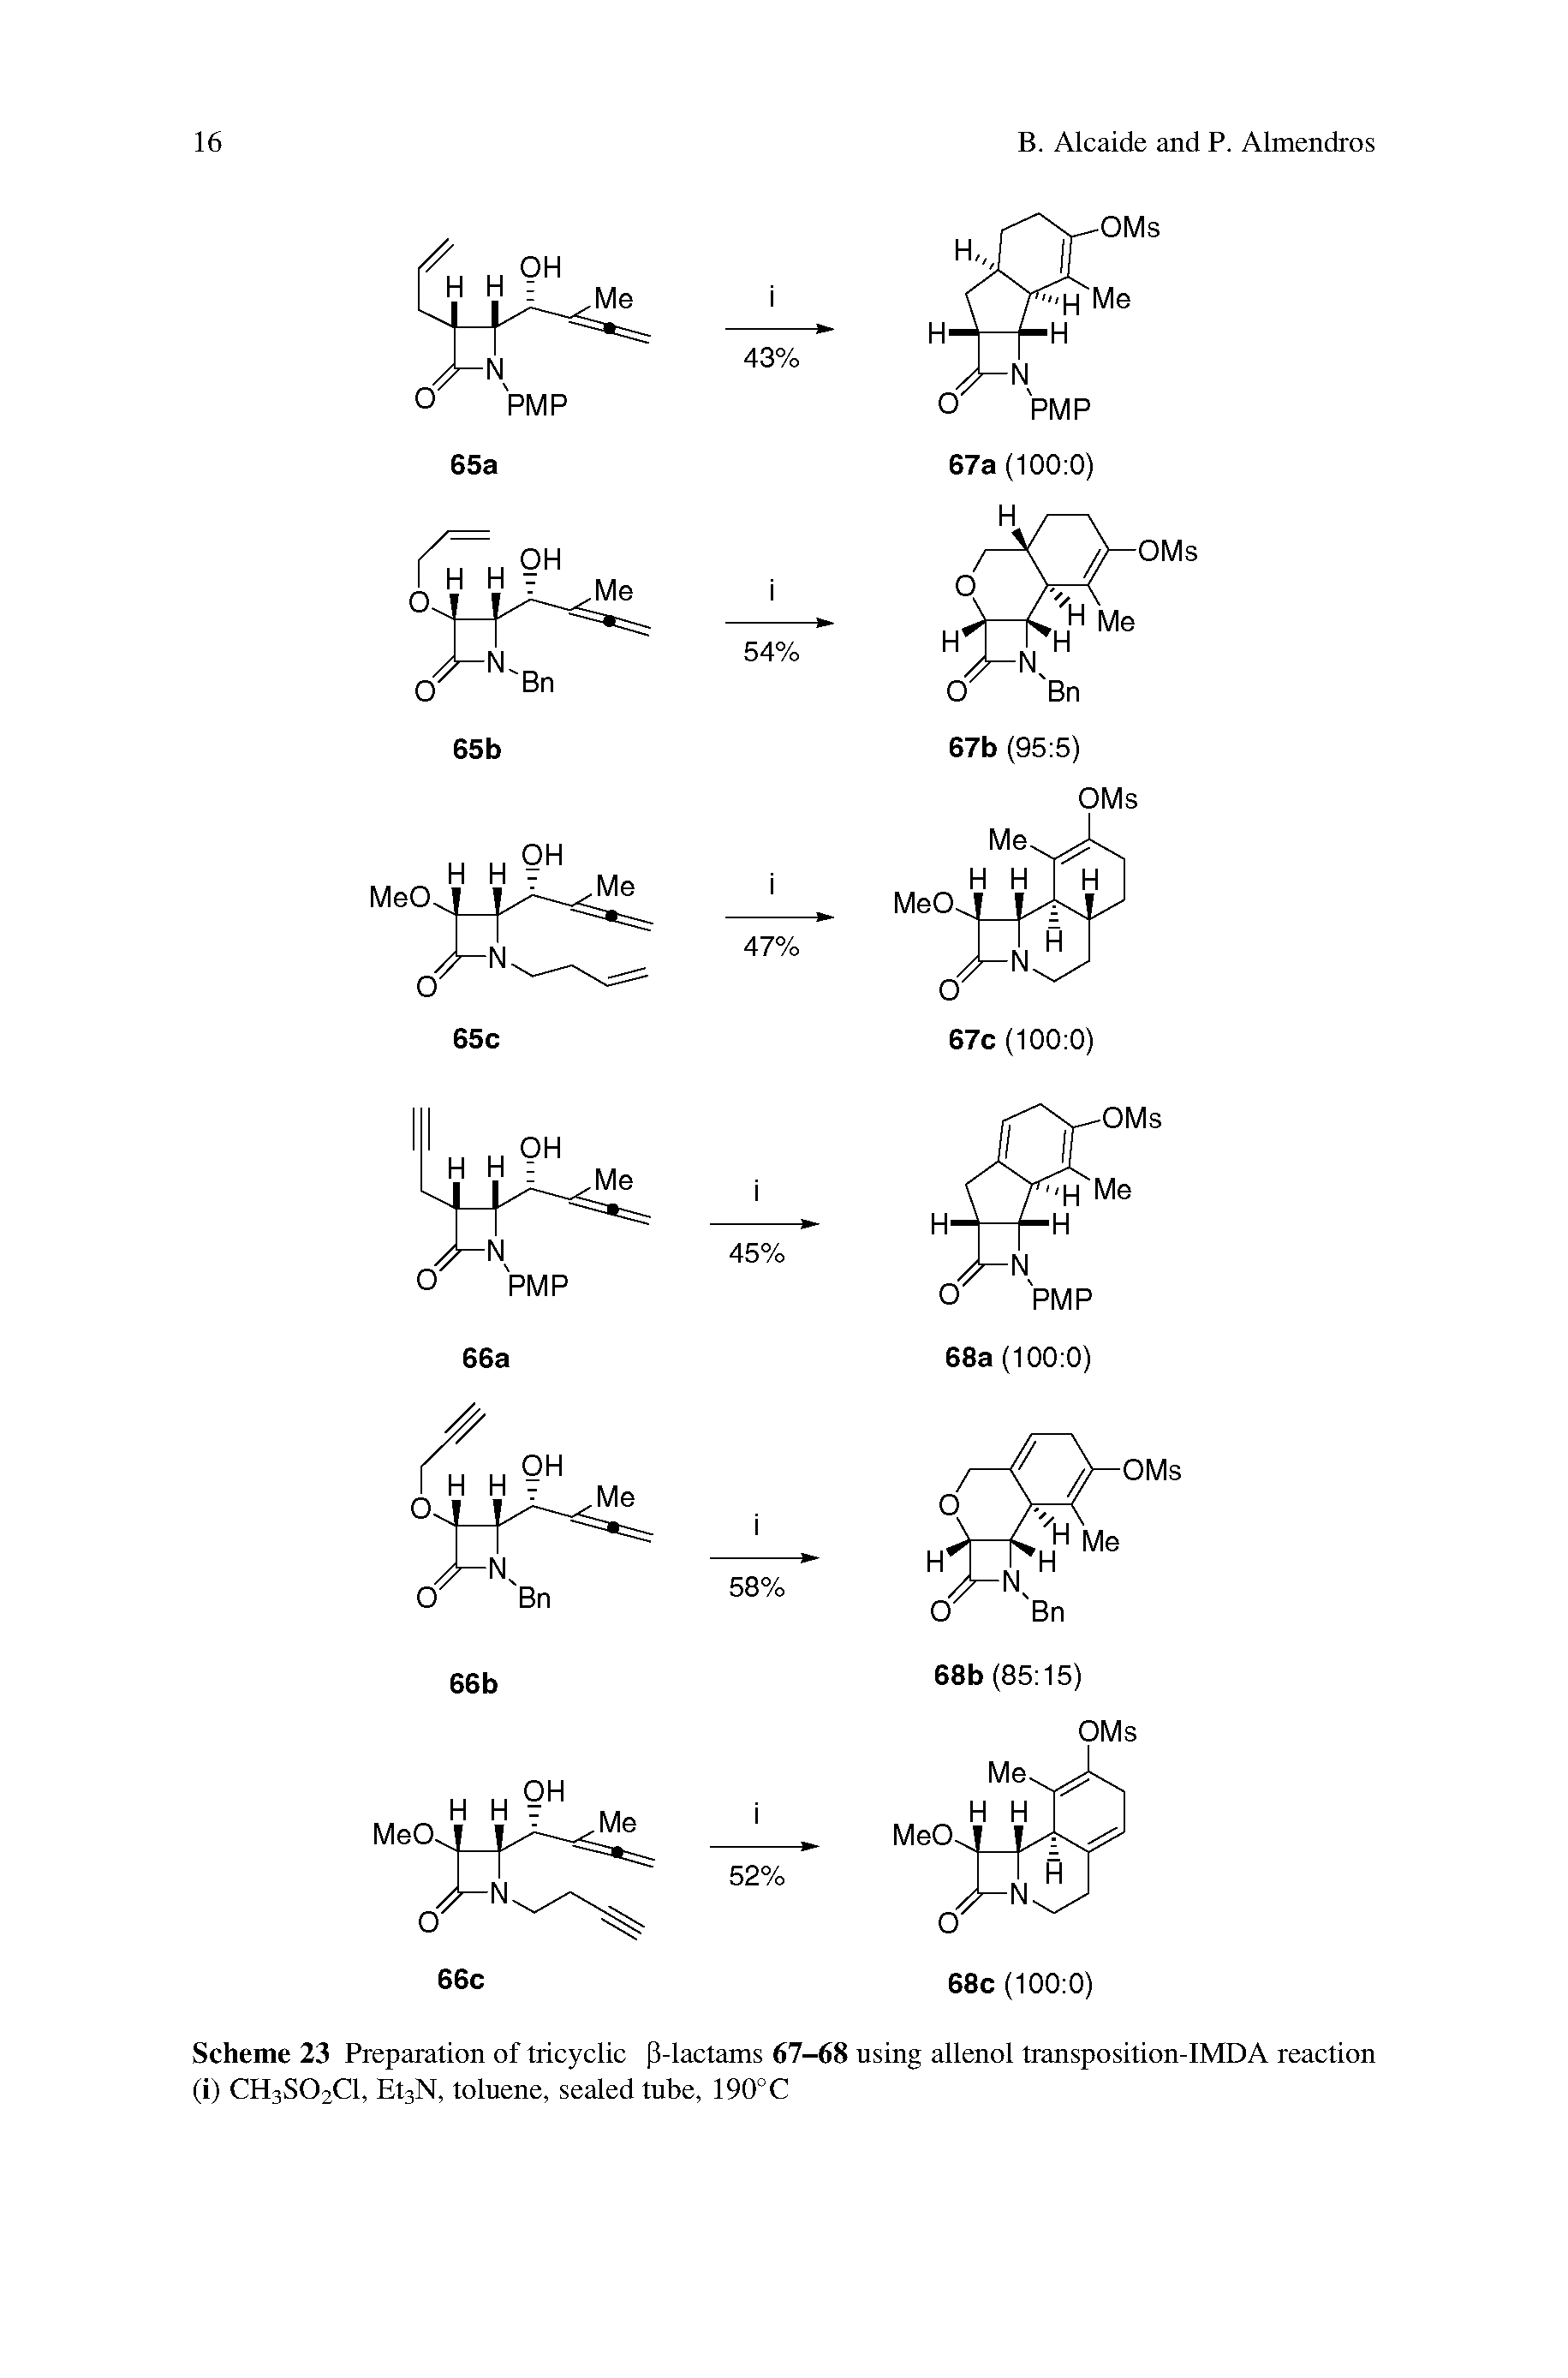 Scheme 23 Preparation of tricyclic [1-lactams 67-68 using allenol transposition-IMDA reaction (i) CH3S02C1, Et3N, toluene, sealed tube, 190°C...